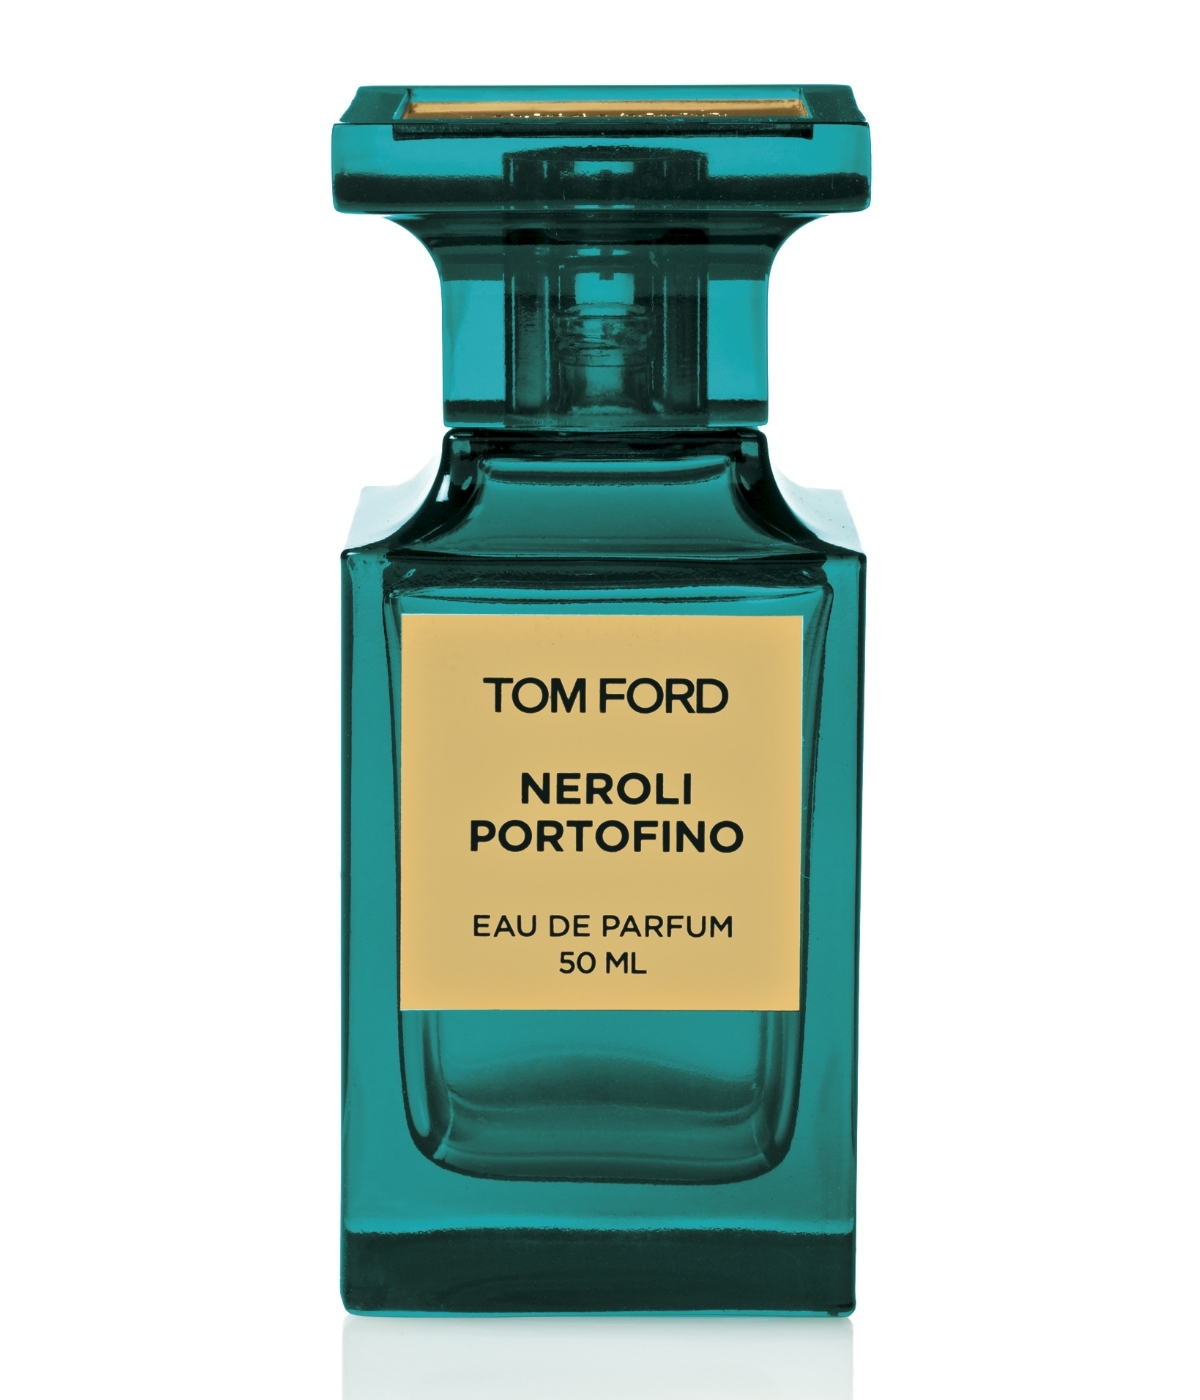 Neroli Portofino de Tom Ford.